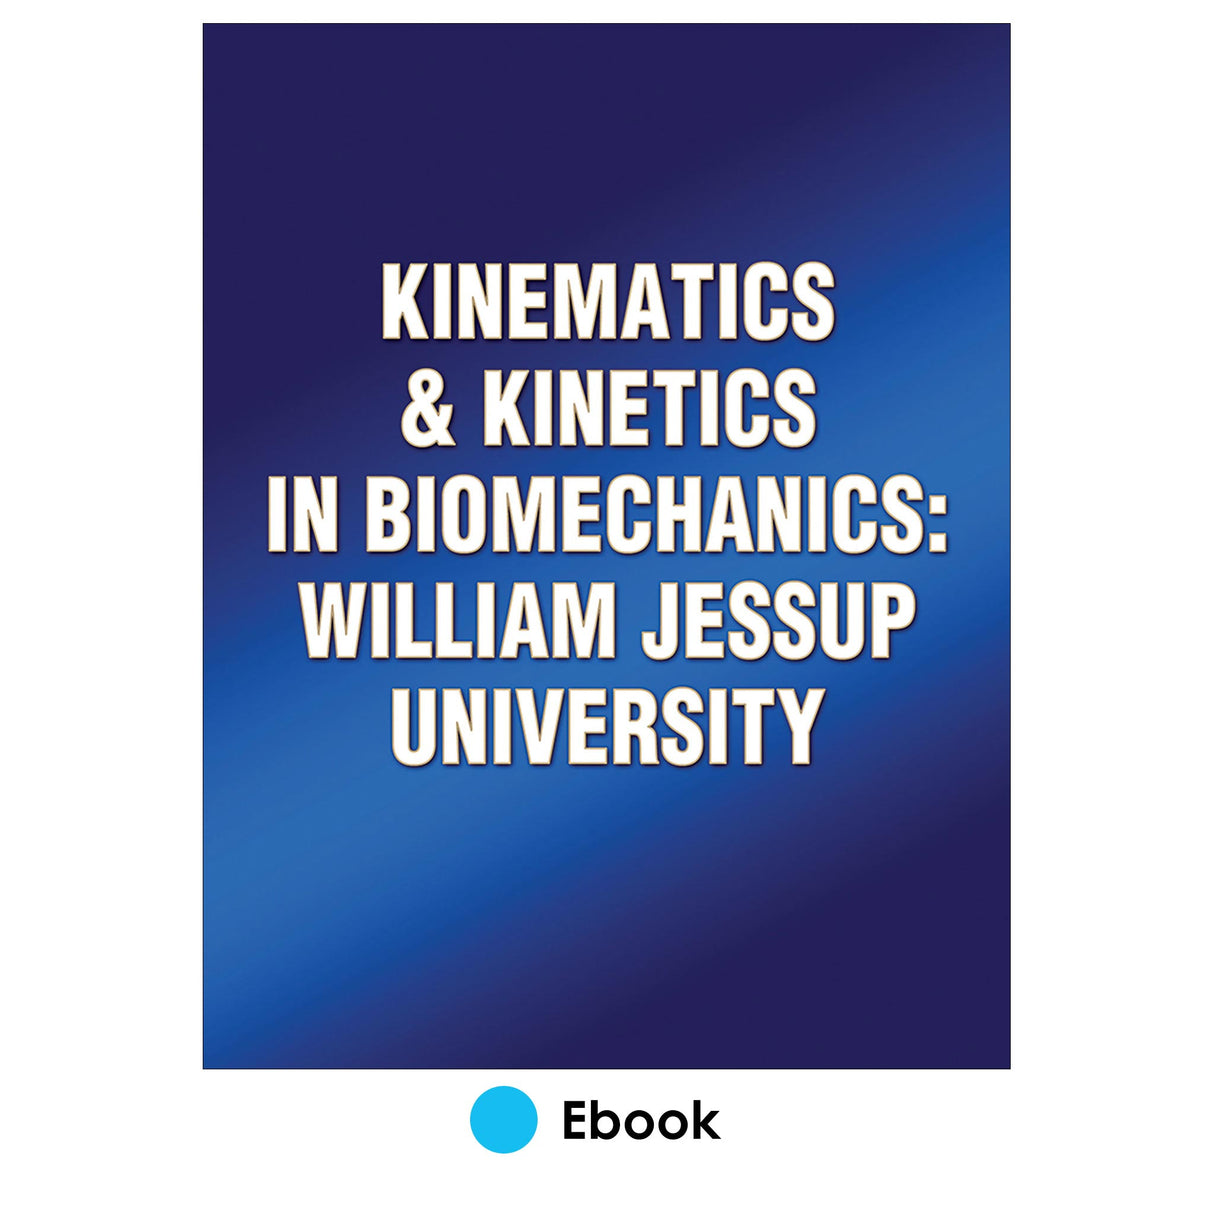 Kinematics & Kinetics in Biomechanics: William Jessup University